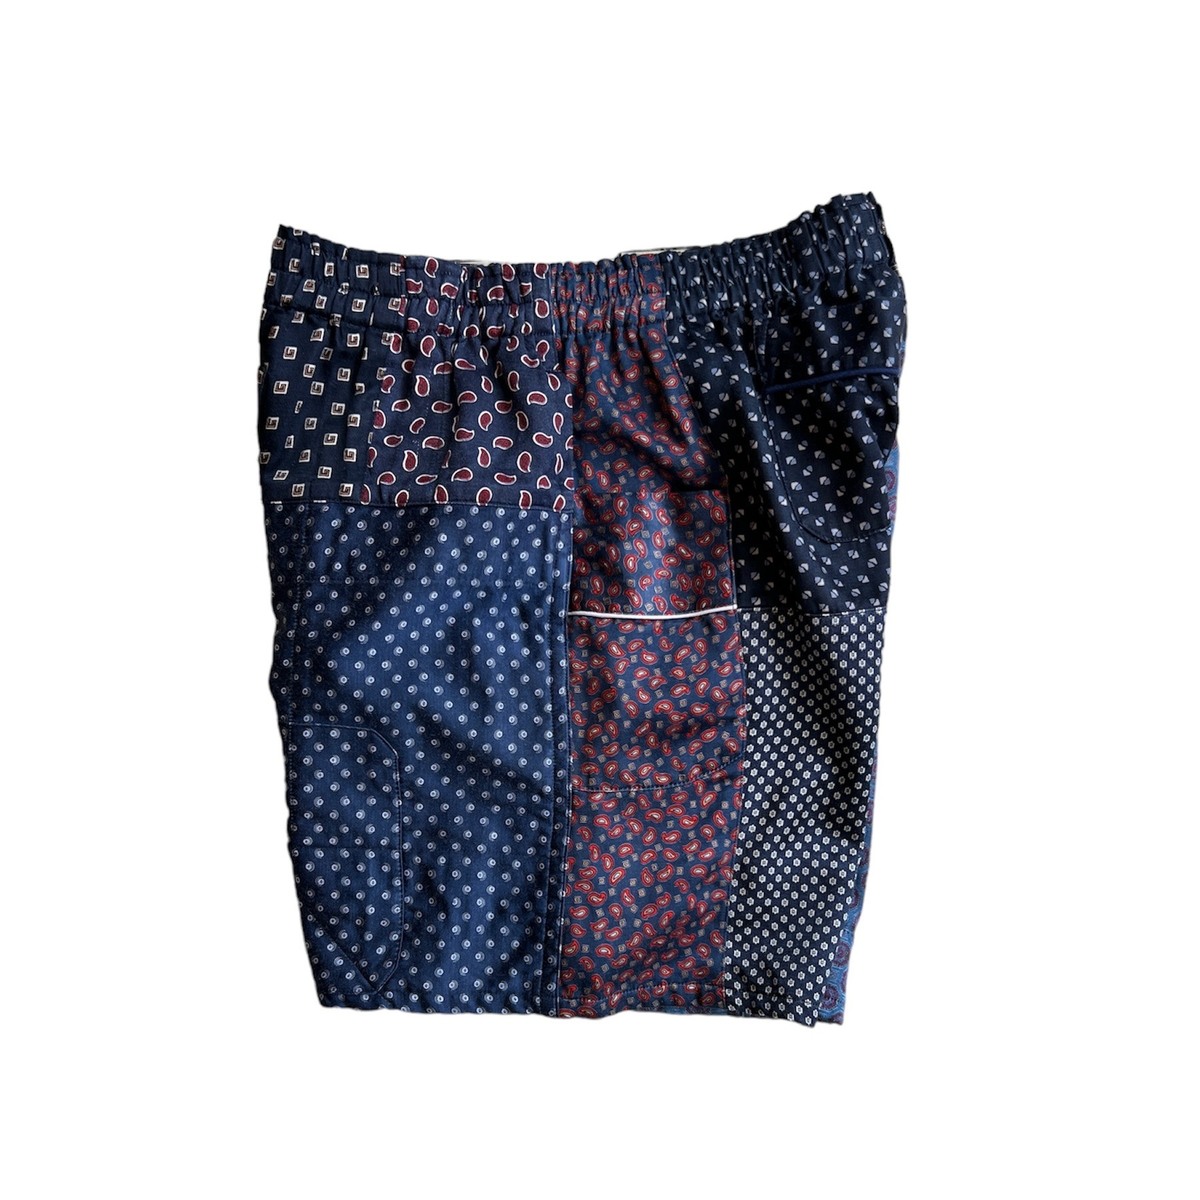 OLDPARK P.B shorts - 画像4枚目